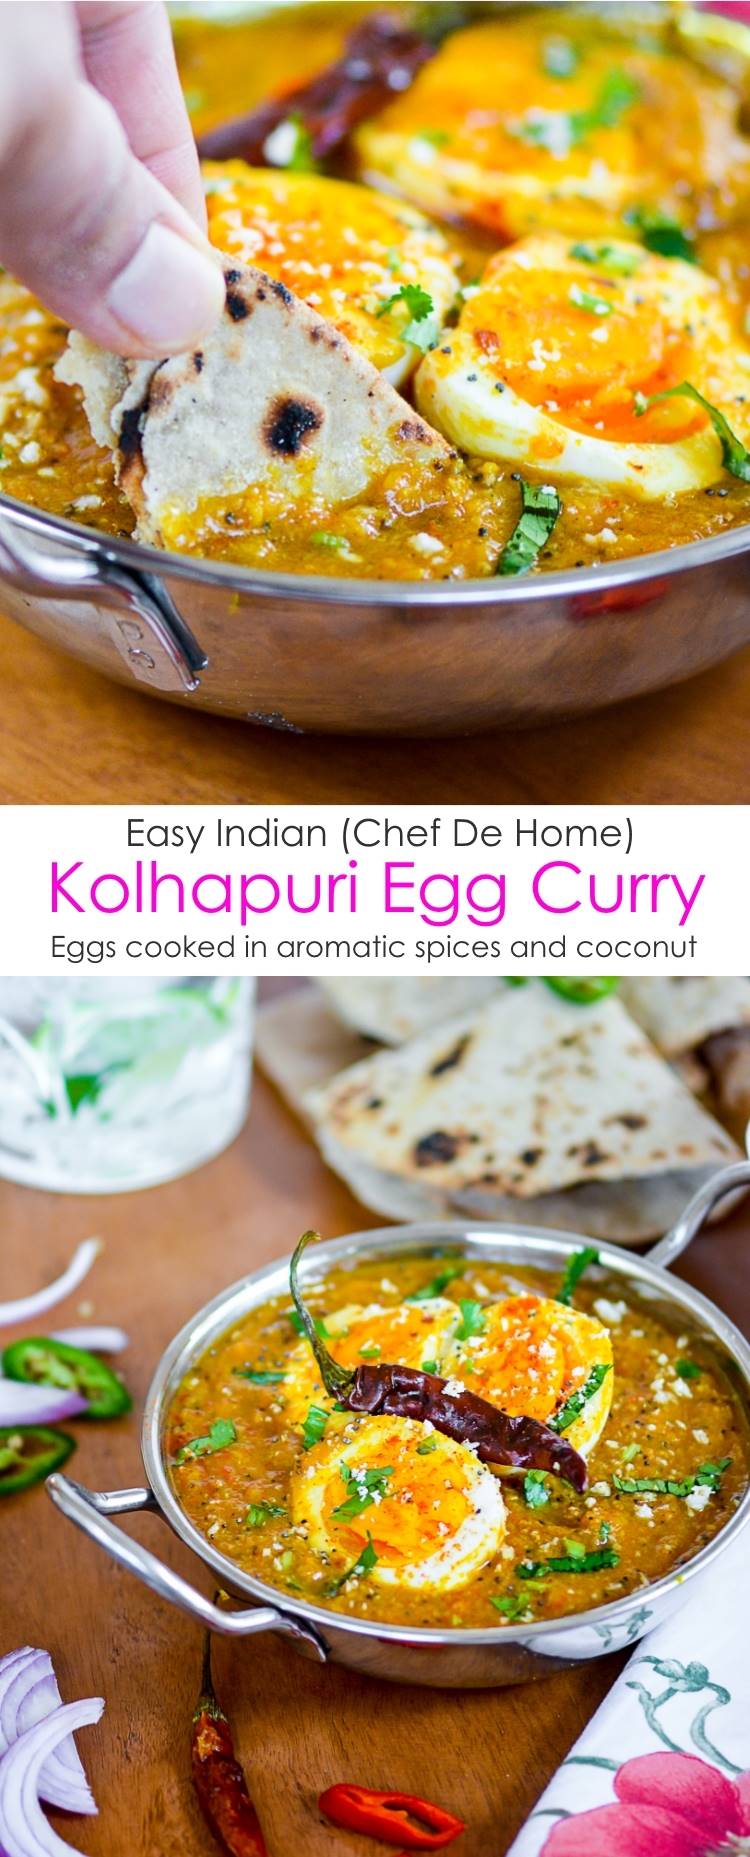 easy indian kolhapuri egg curry recipe | chefdehome